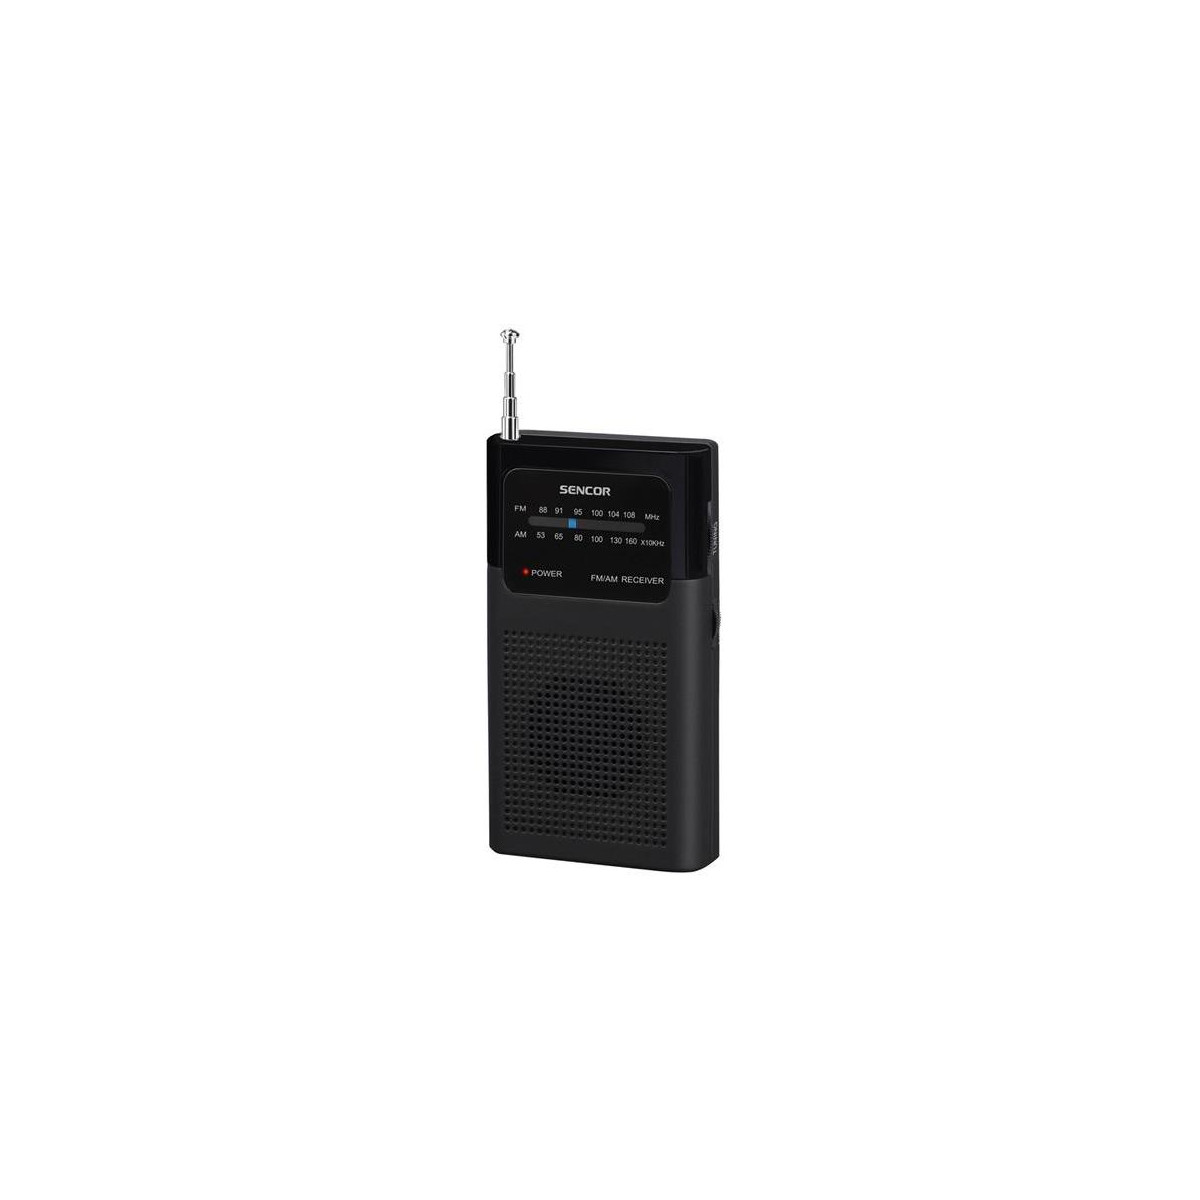 More about Rádio SENCOR SRD 1100 Black